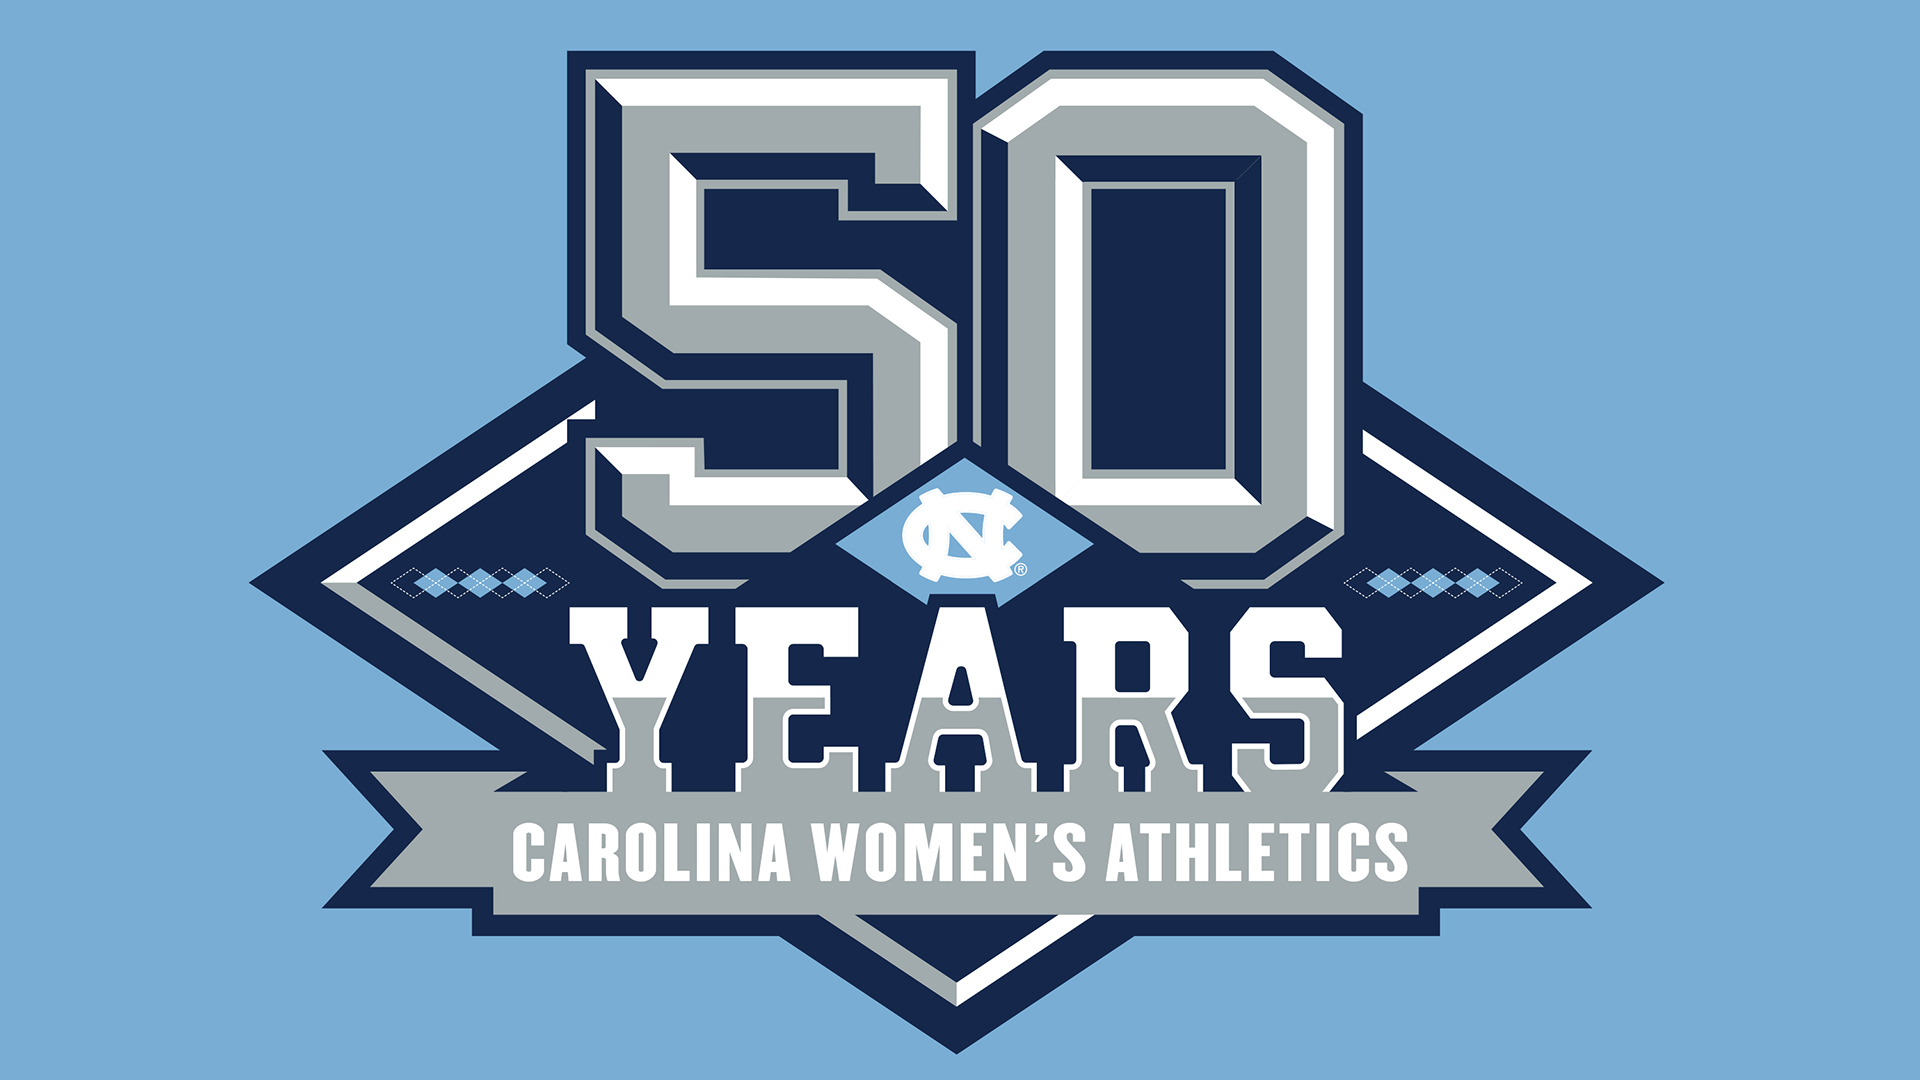 50 years of glory: Carolina women's athletics and Title IX